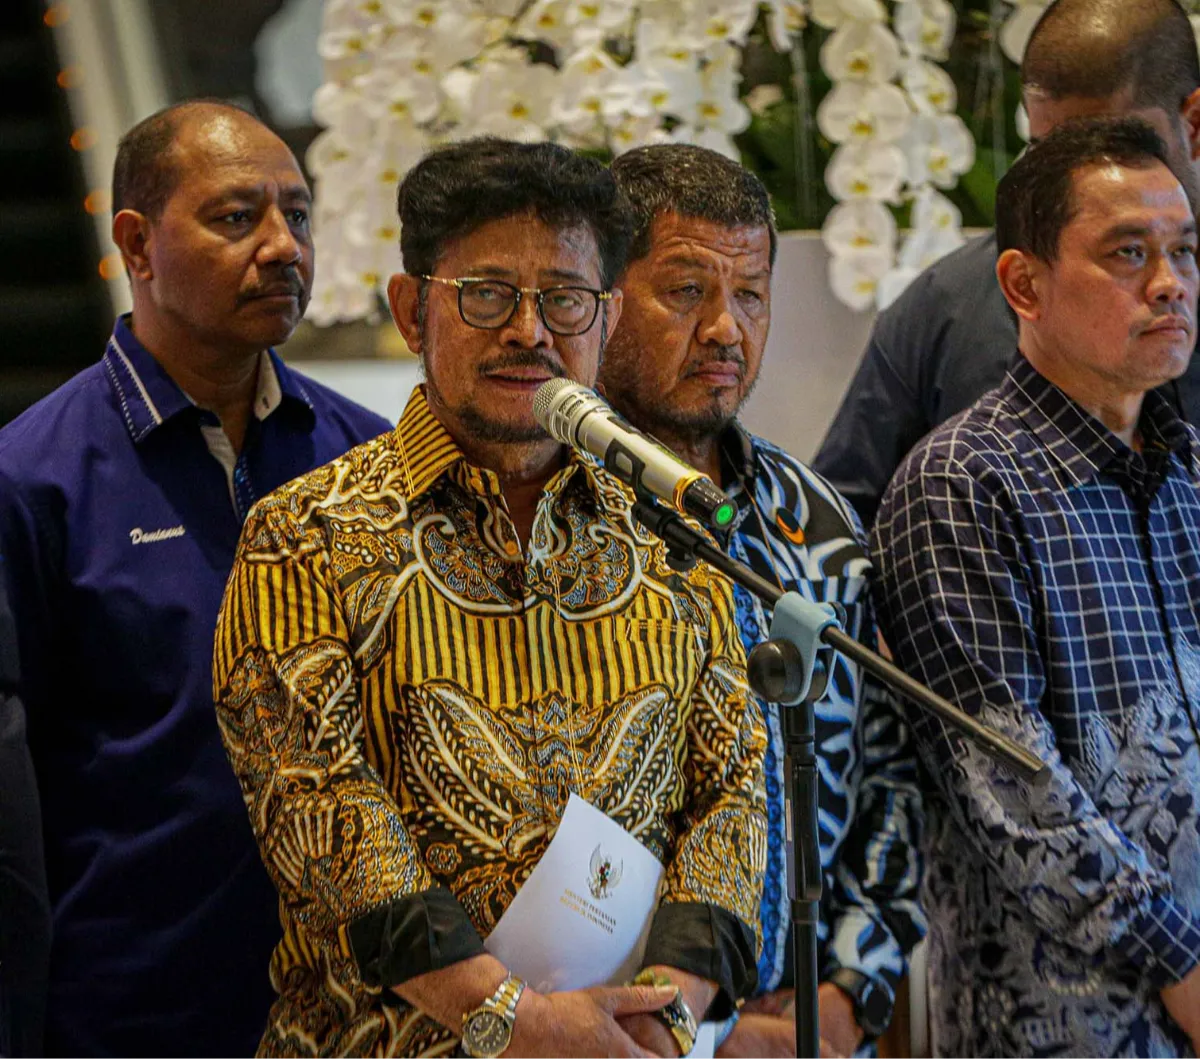 Kapolda Metro Sebut Kombes Irwan Diperiksa Hari Ini Terkait Dugaan Pimpinan KPK Peras Syahrul Yasin Limpo